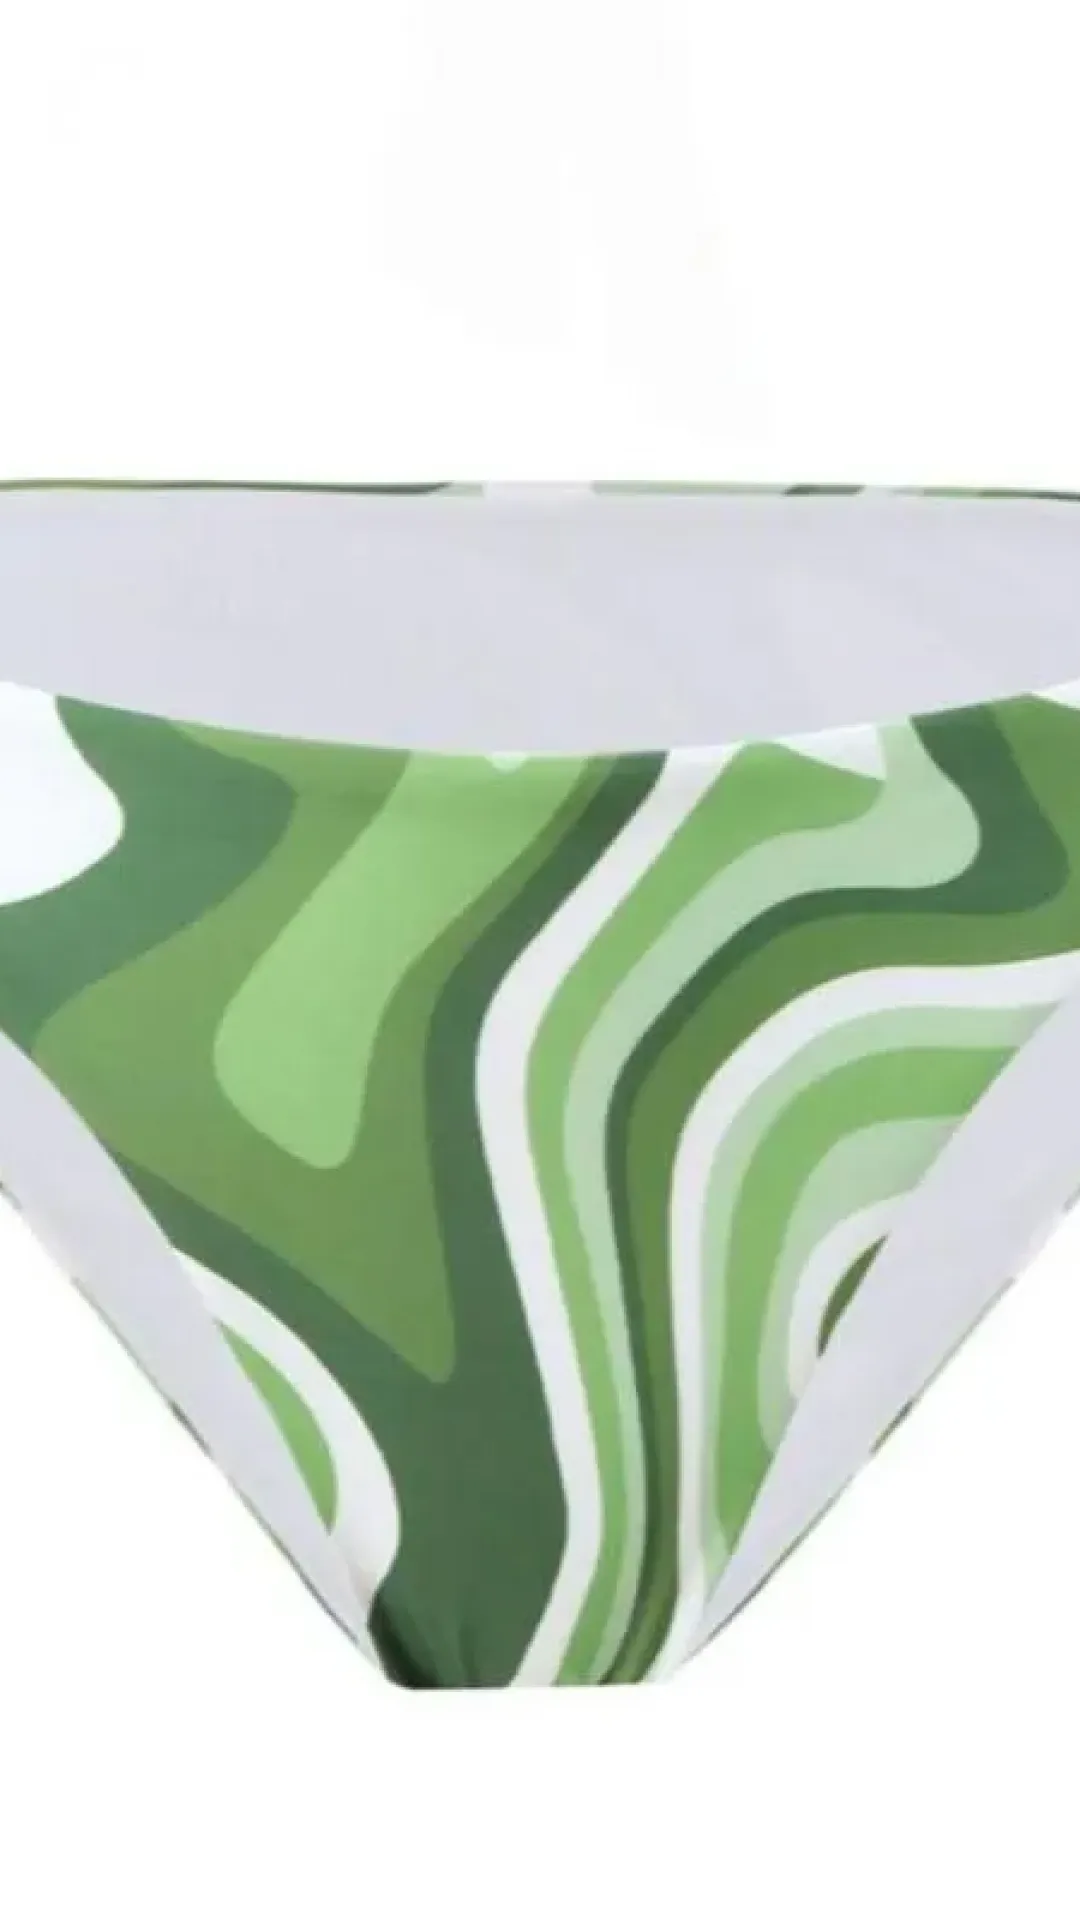 Tanga biquini con laterales huecos estampado verde